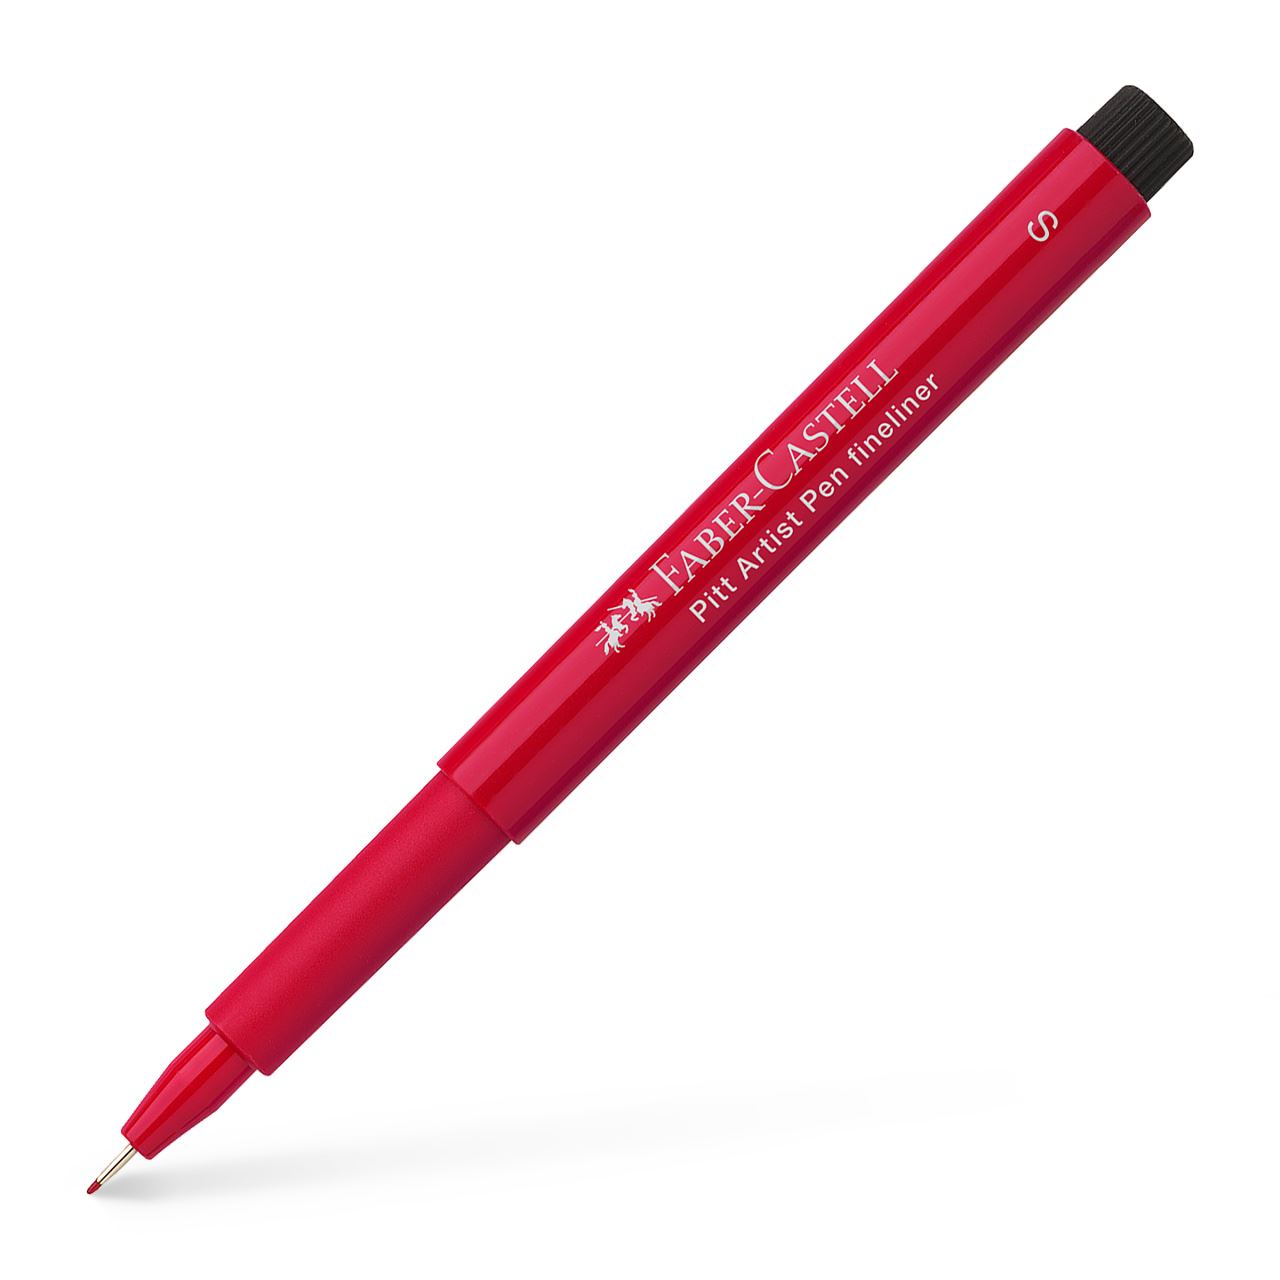 Faber-Castell - Pitt Artist Pen Fineliner S India ink pen, deep scarlet red